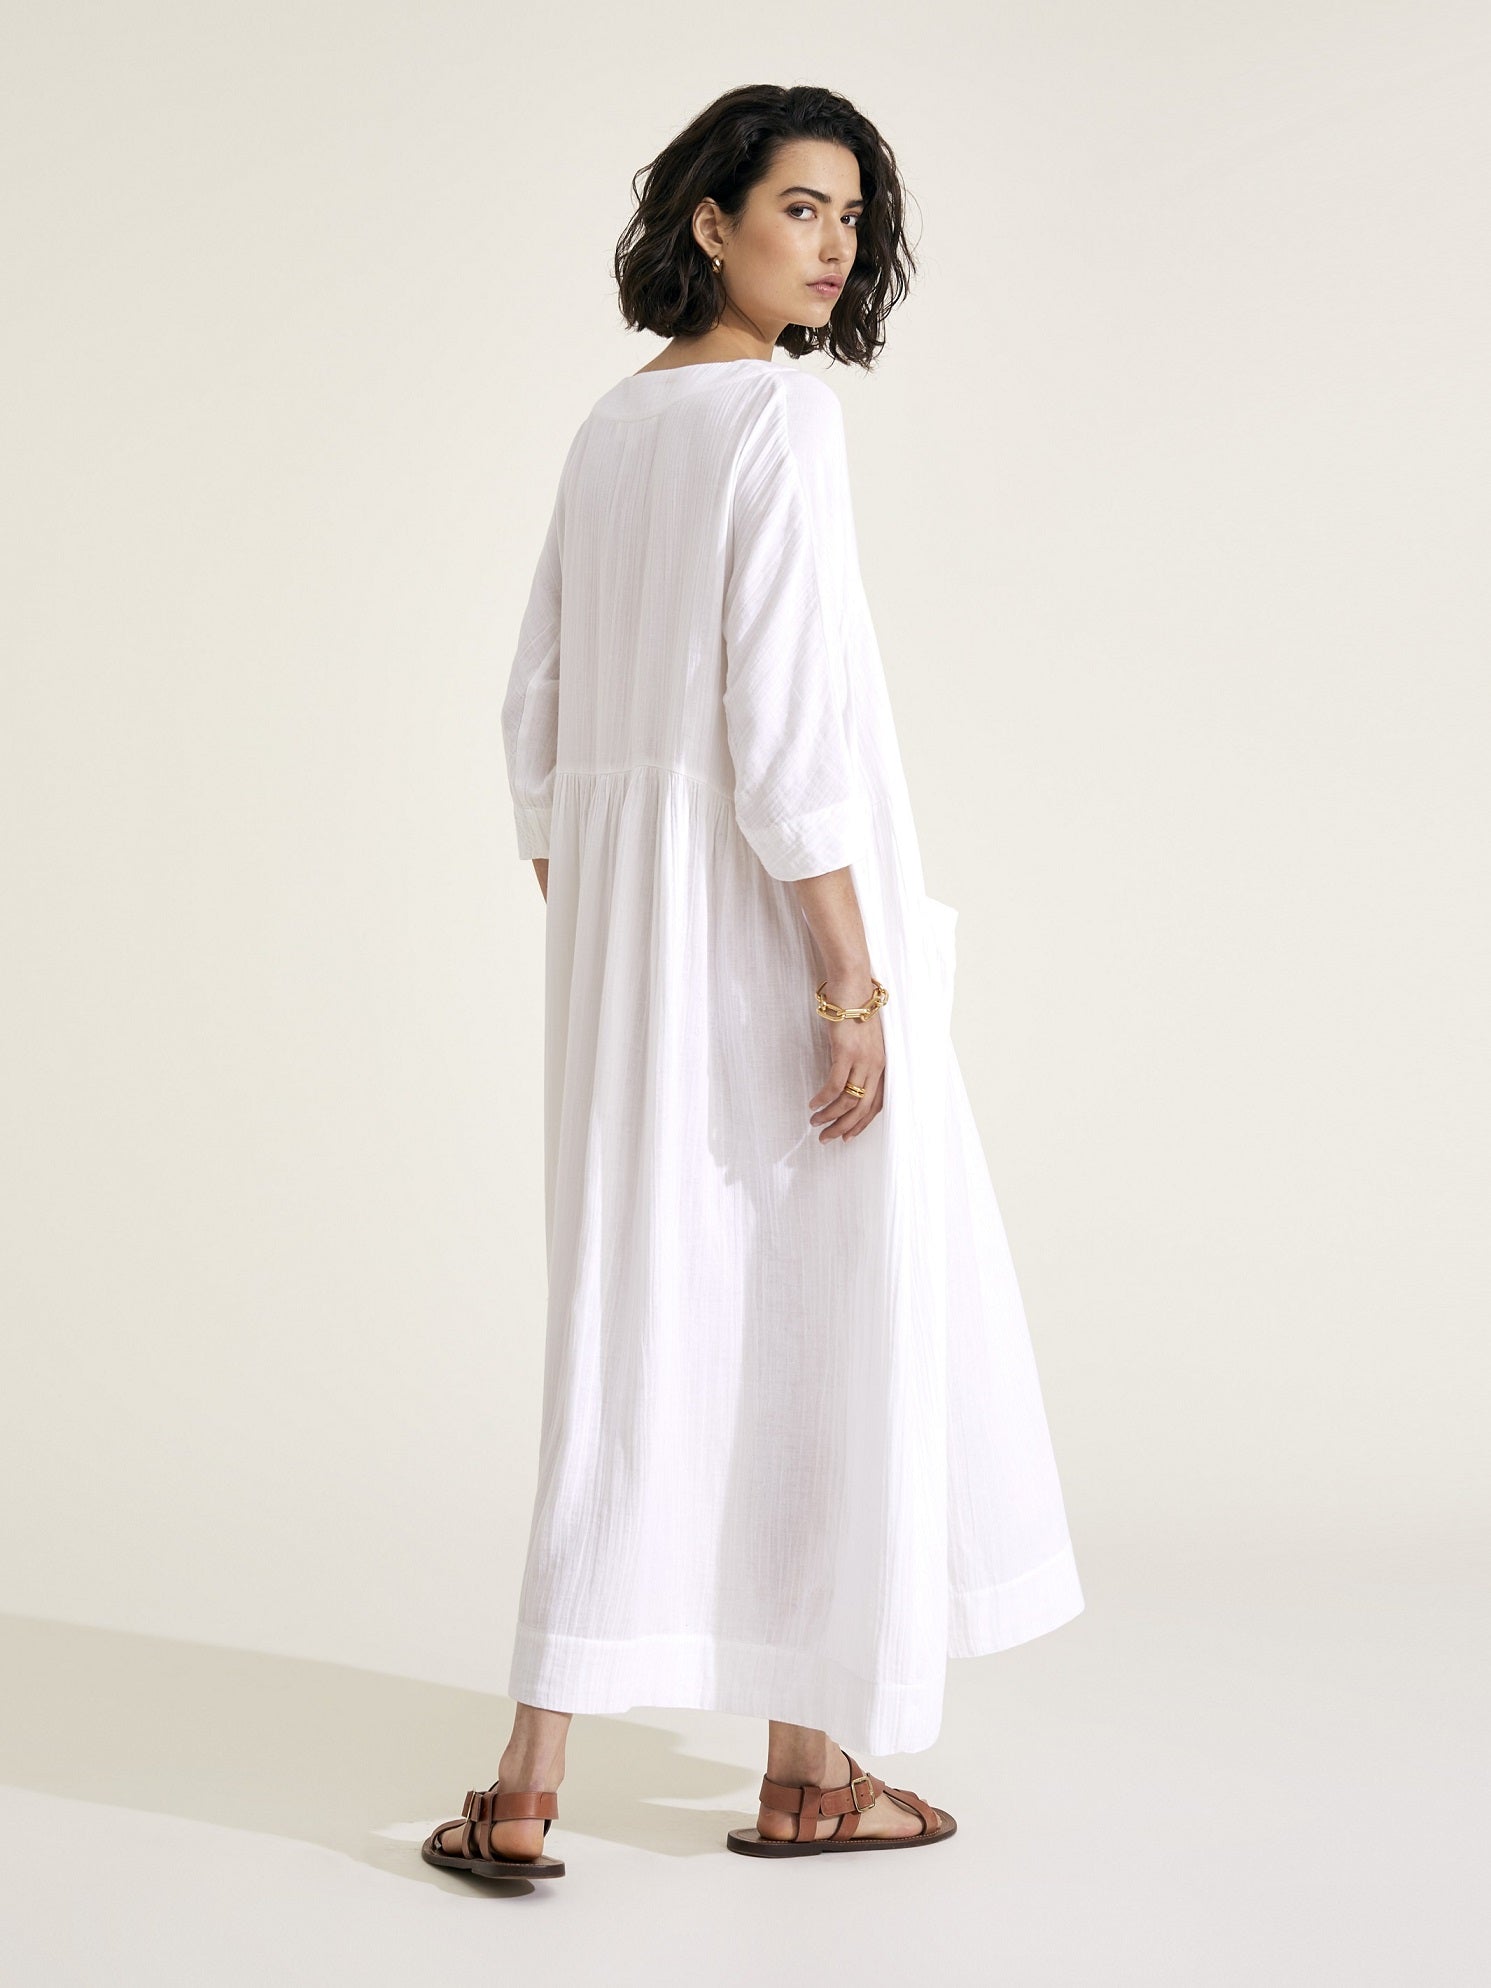 DAPHNE - White Cotton Dress - Mondo Corsini